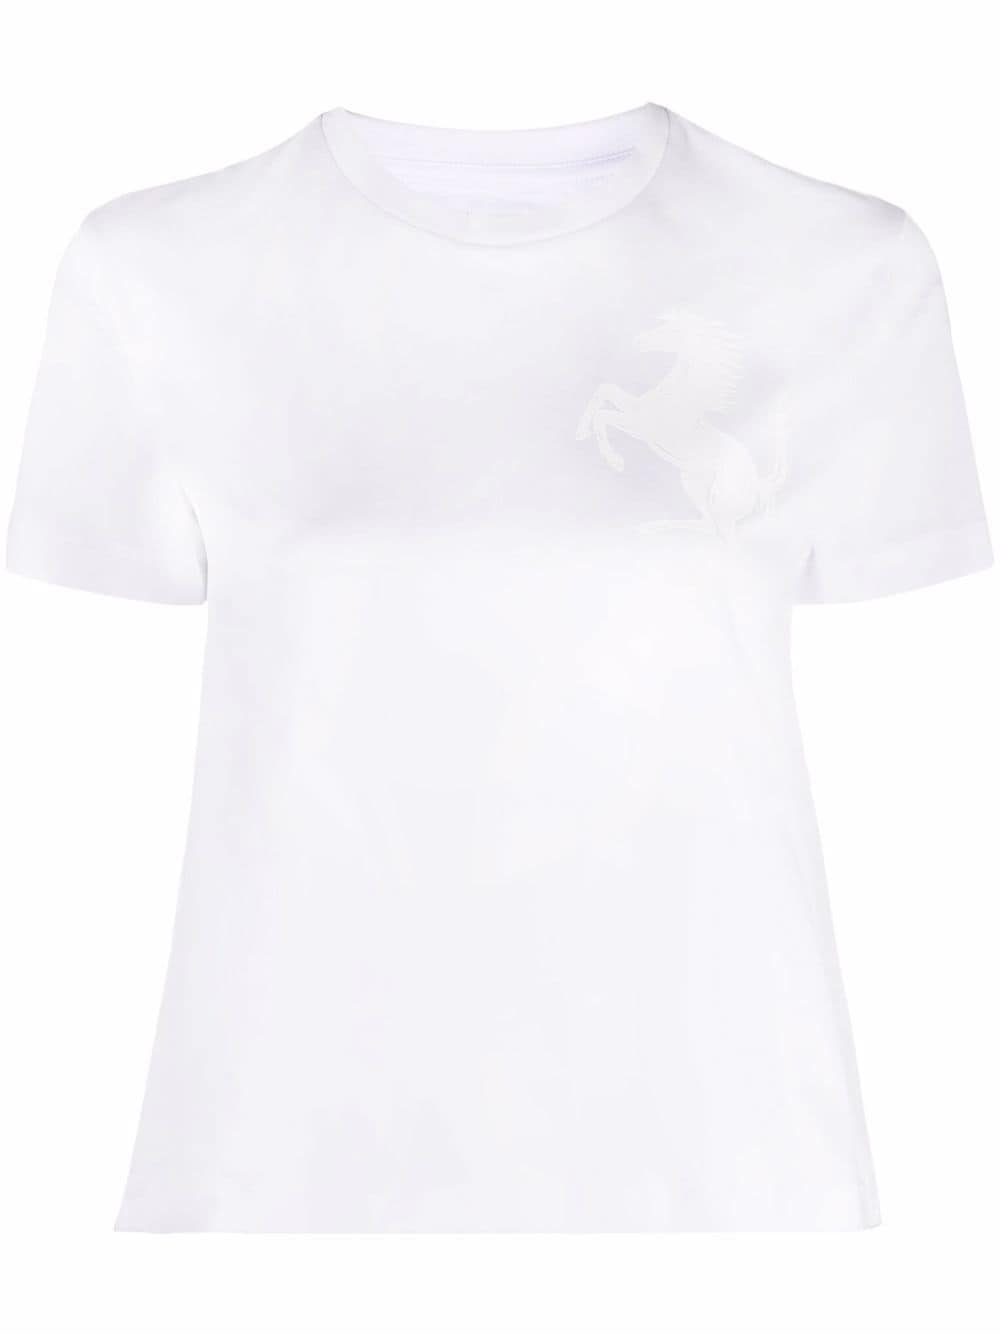 Ferrari Prancing Horse Cotton T-shirt - Farfetch